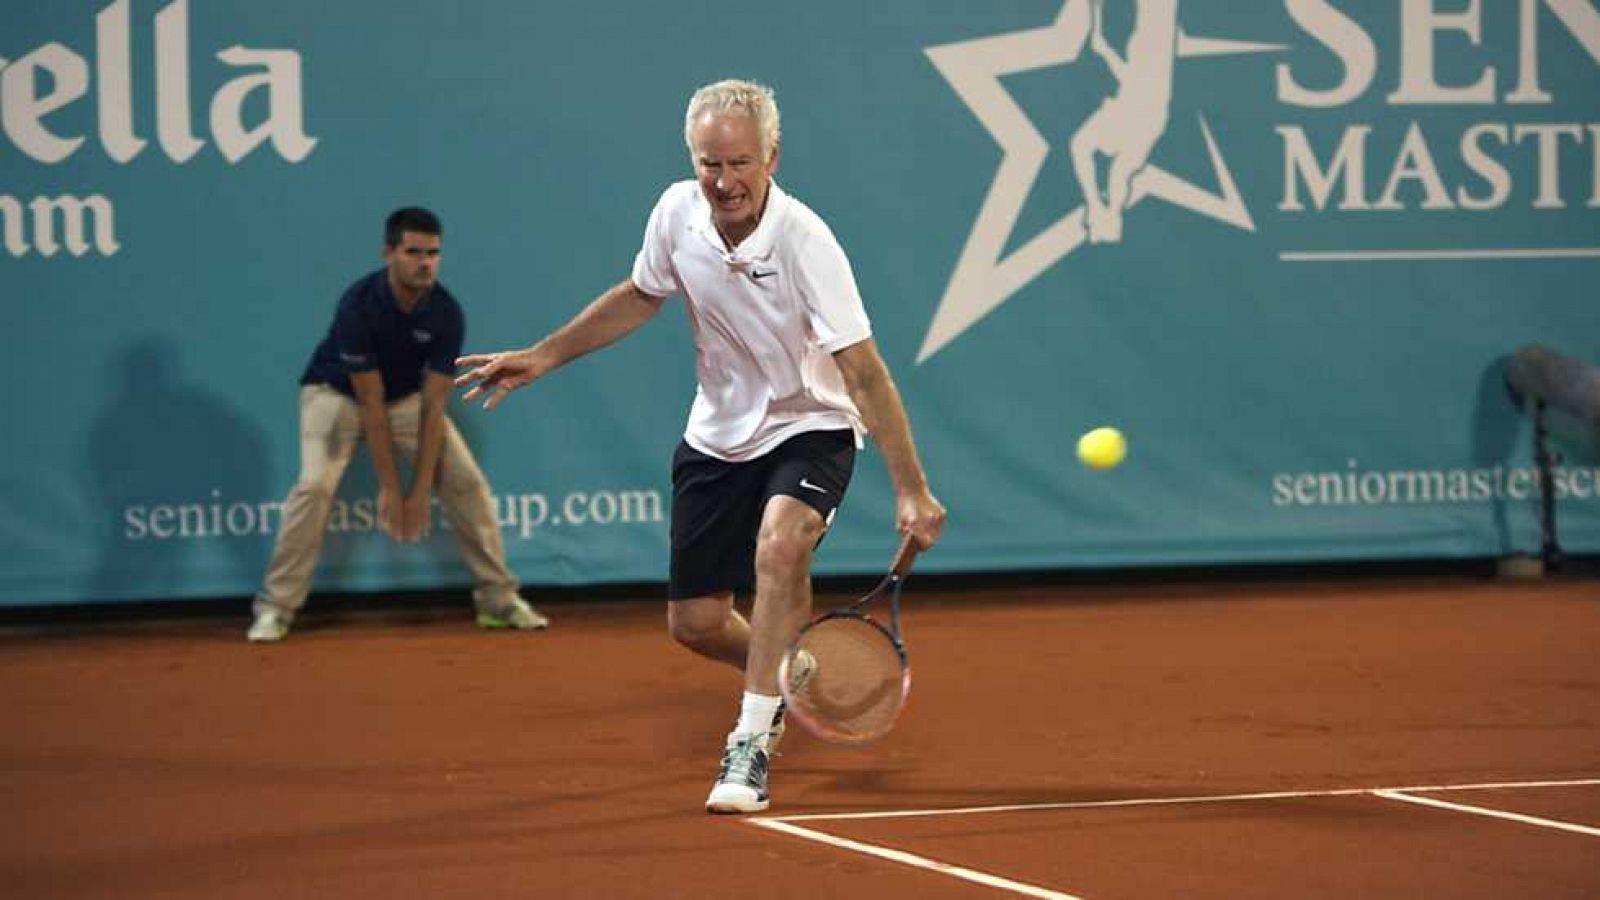 Tenis - 'Senior Master Cup 2016' - 2ª Semifinal: John McEnroe - Mats Wilander